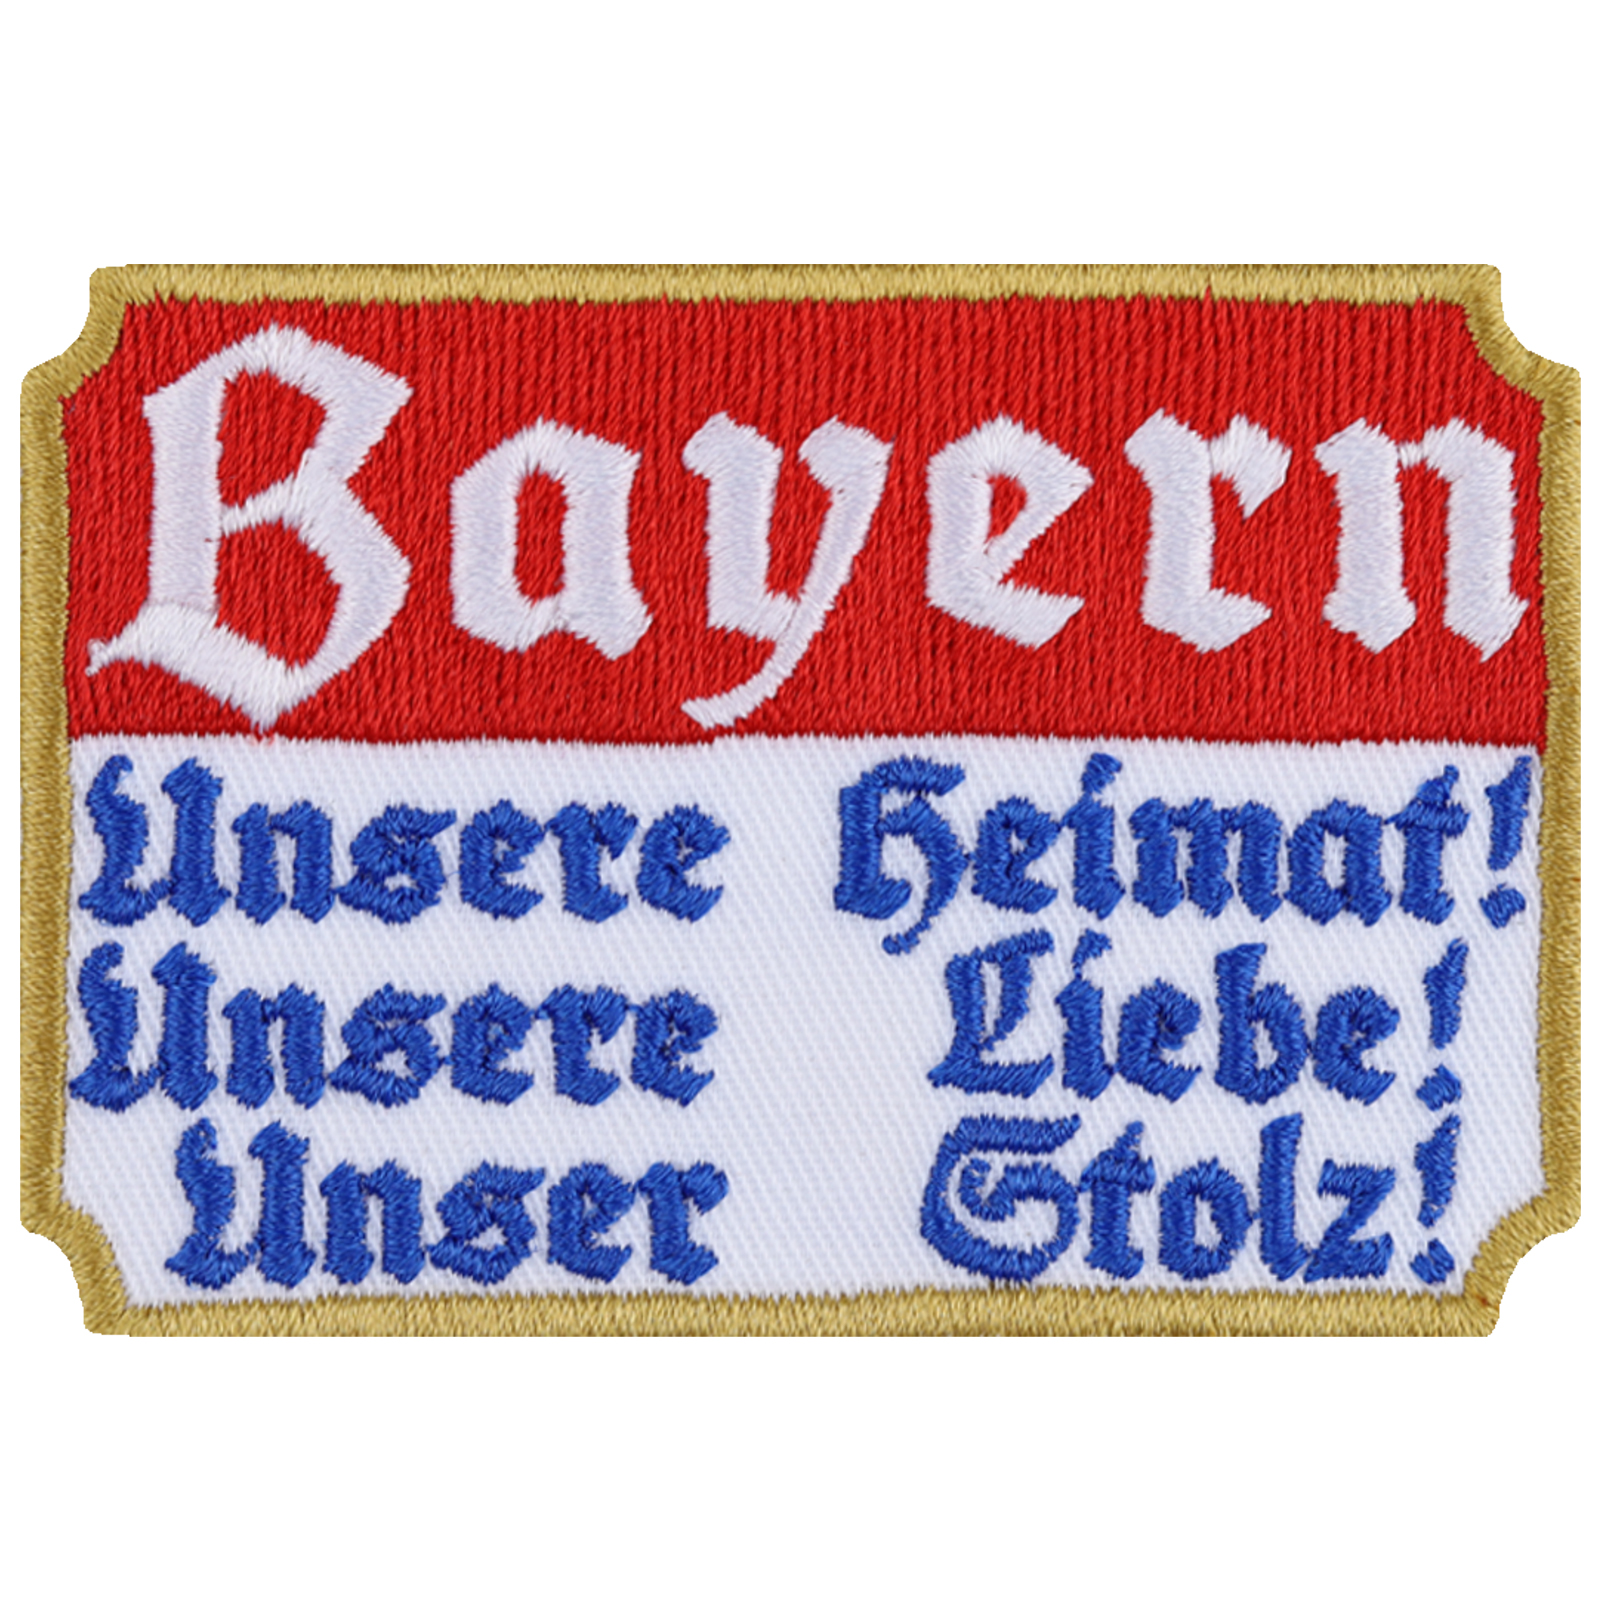 Bayern - Unsere Heimat, unsere Liebe, unser Stolz - Patch